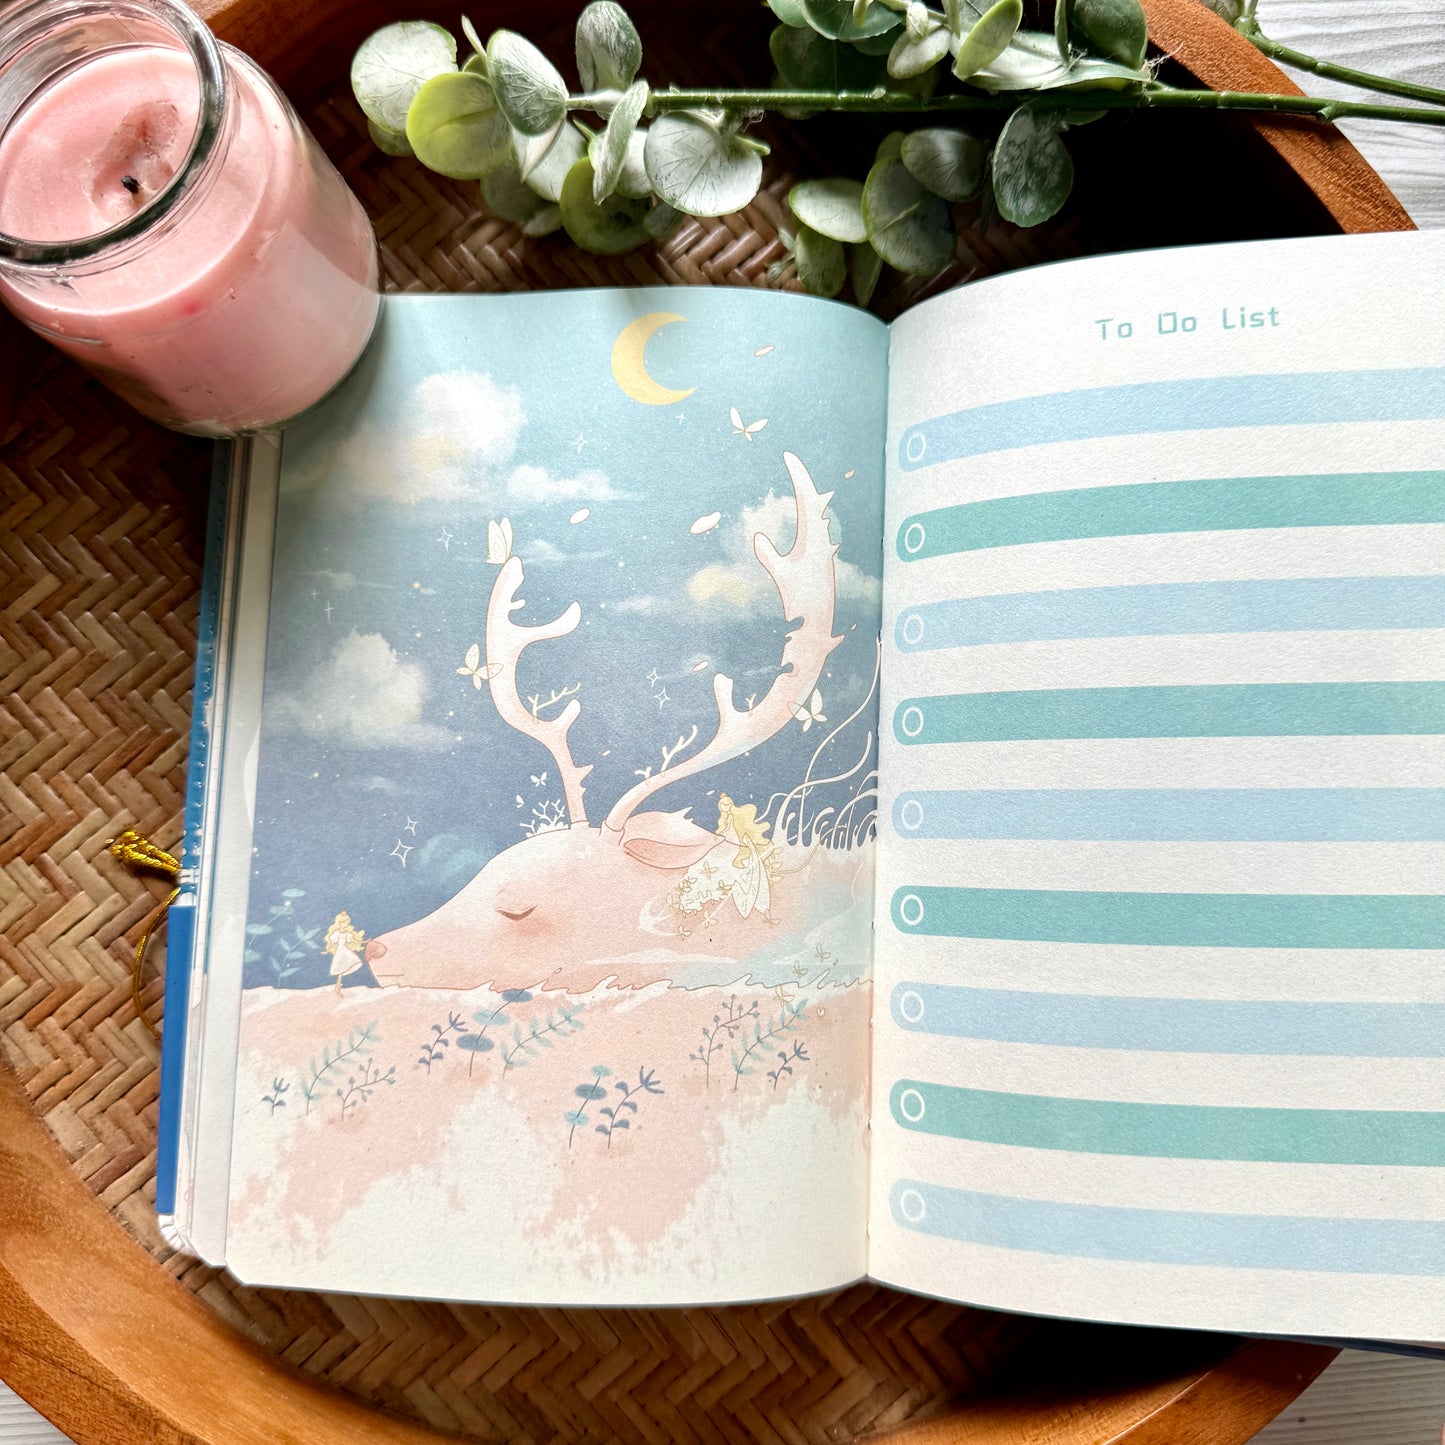 JGPB321124 a Kawaii Dream Premium Notebook | Diary | Undated Planner